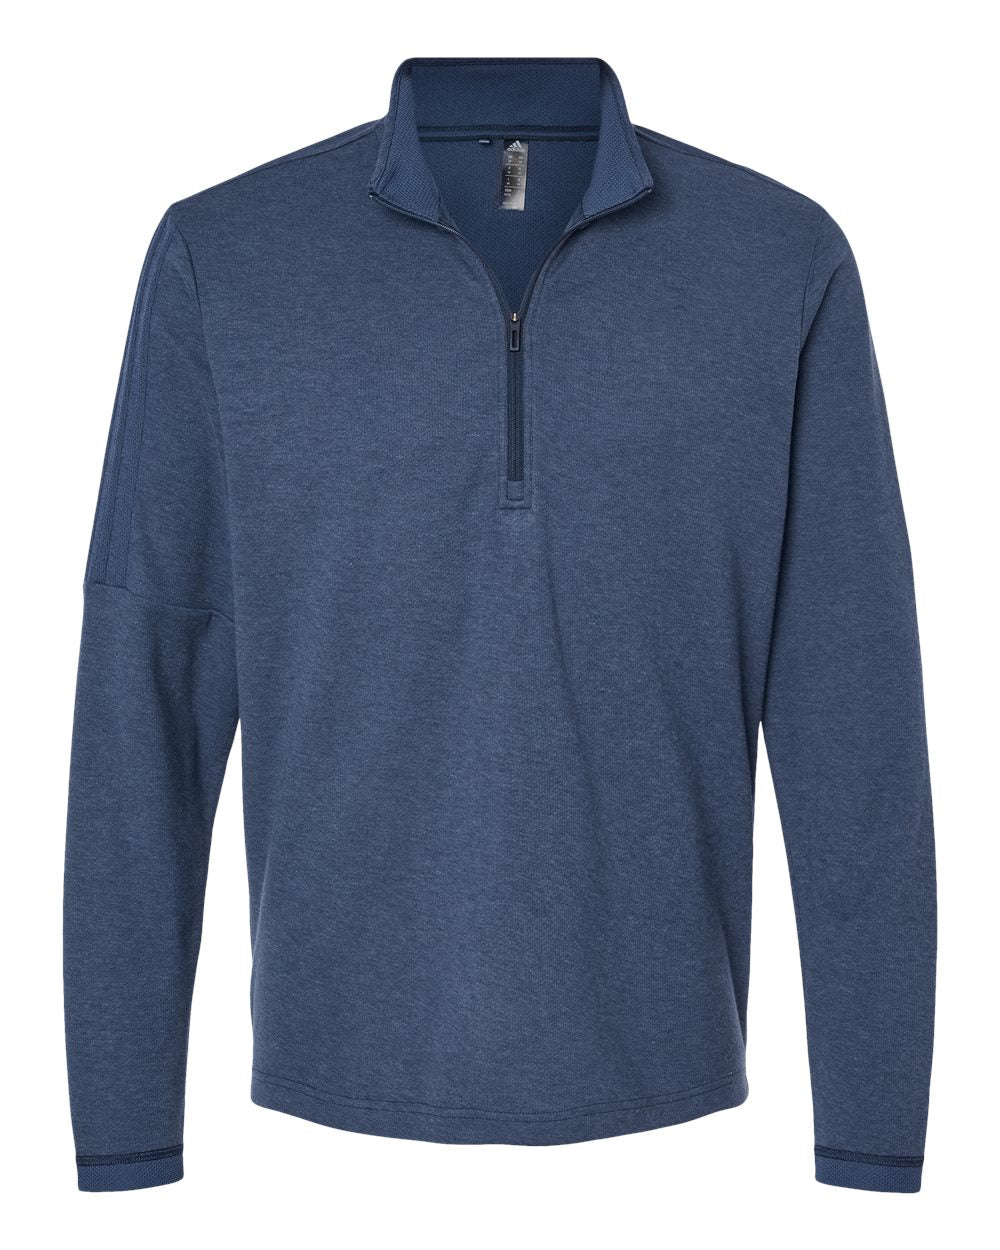 Adidas A554 3-Stripes Quarter-Zip Sweater #color_Collegiate Navy Melange